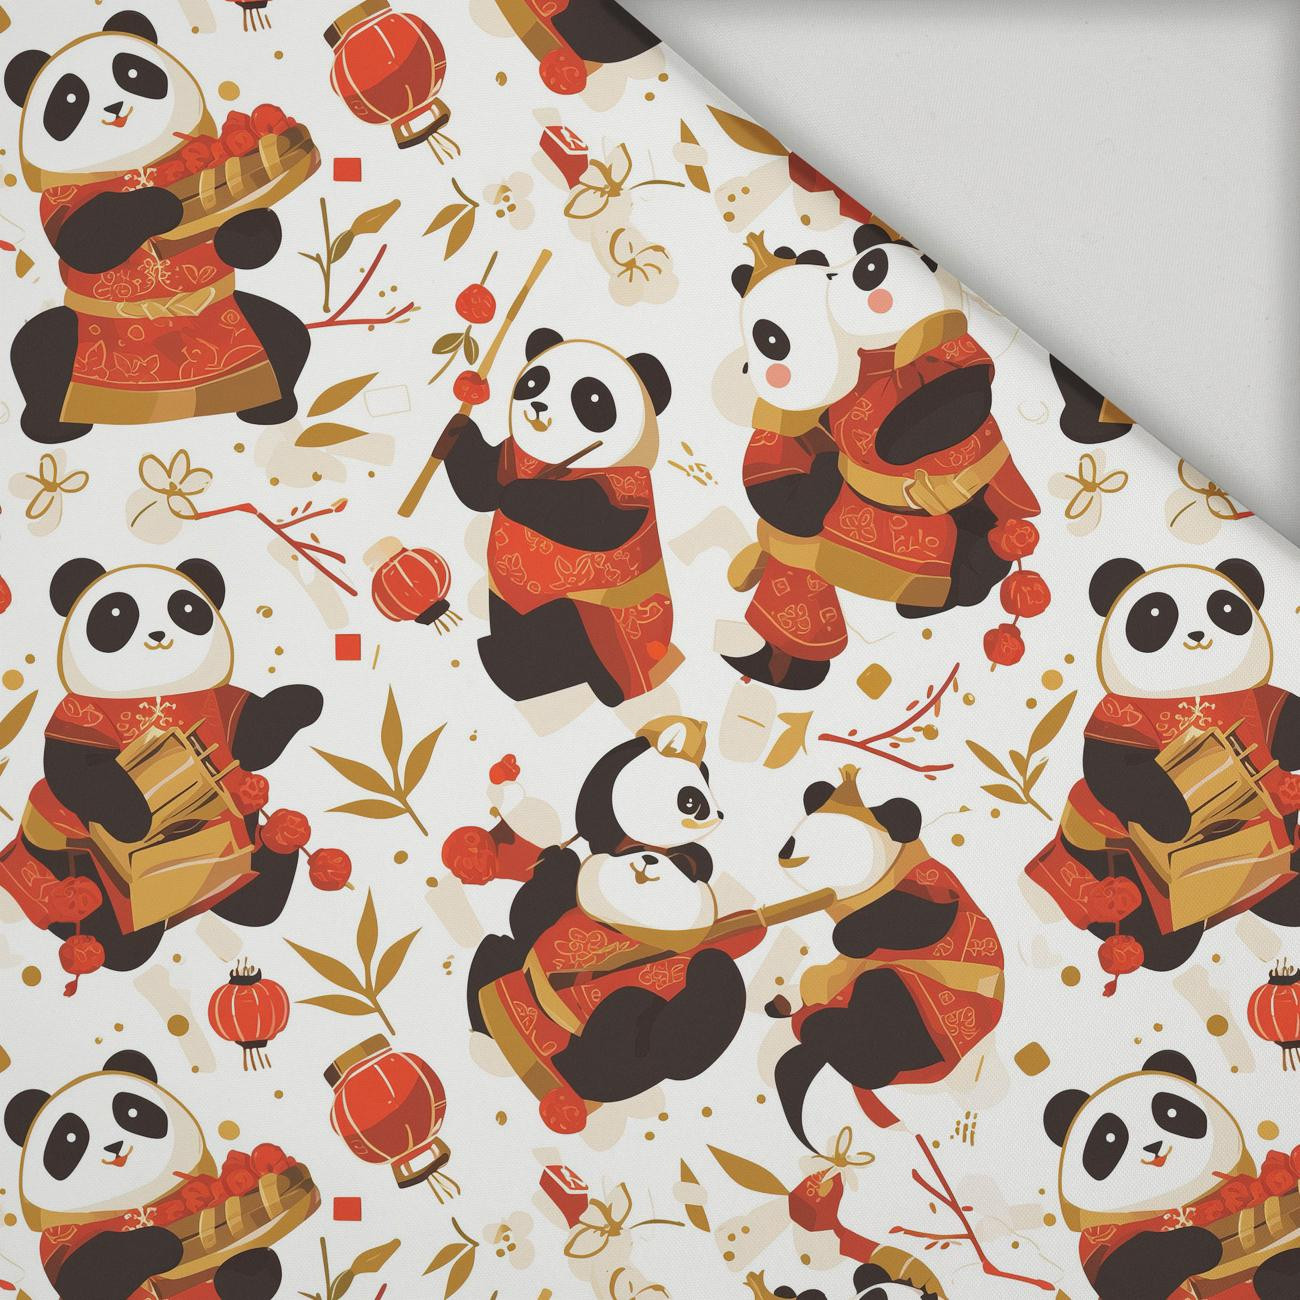 CHINESE PANDAS - quick-drying woven fabric